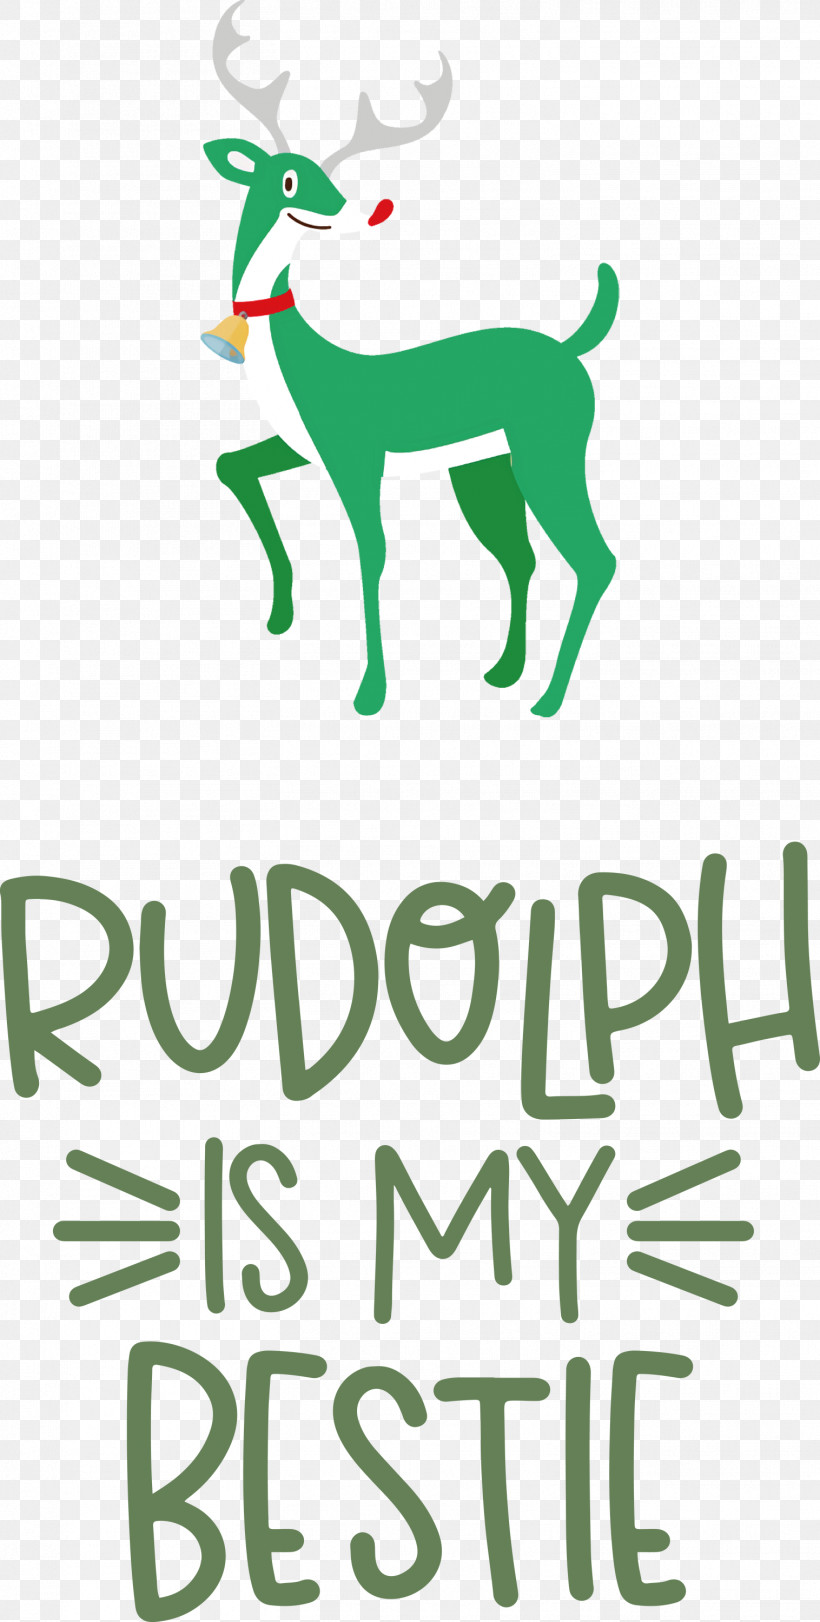 Rudolph Is My Bestie Rudolph Deer, PNG, 1516x2999px, Rudolph Is My Bestie, Christmas, Deer, Green, Line Art Download Free